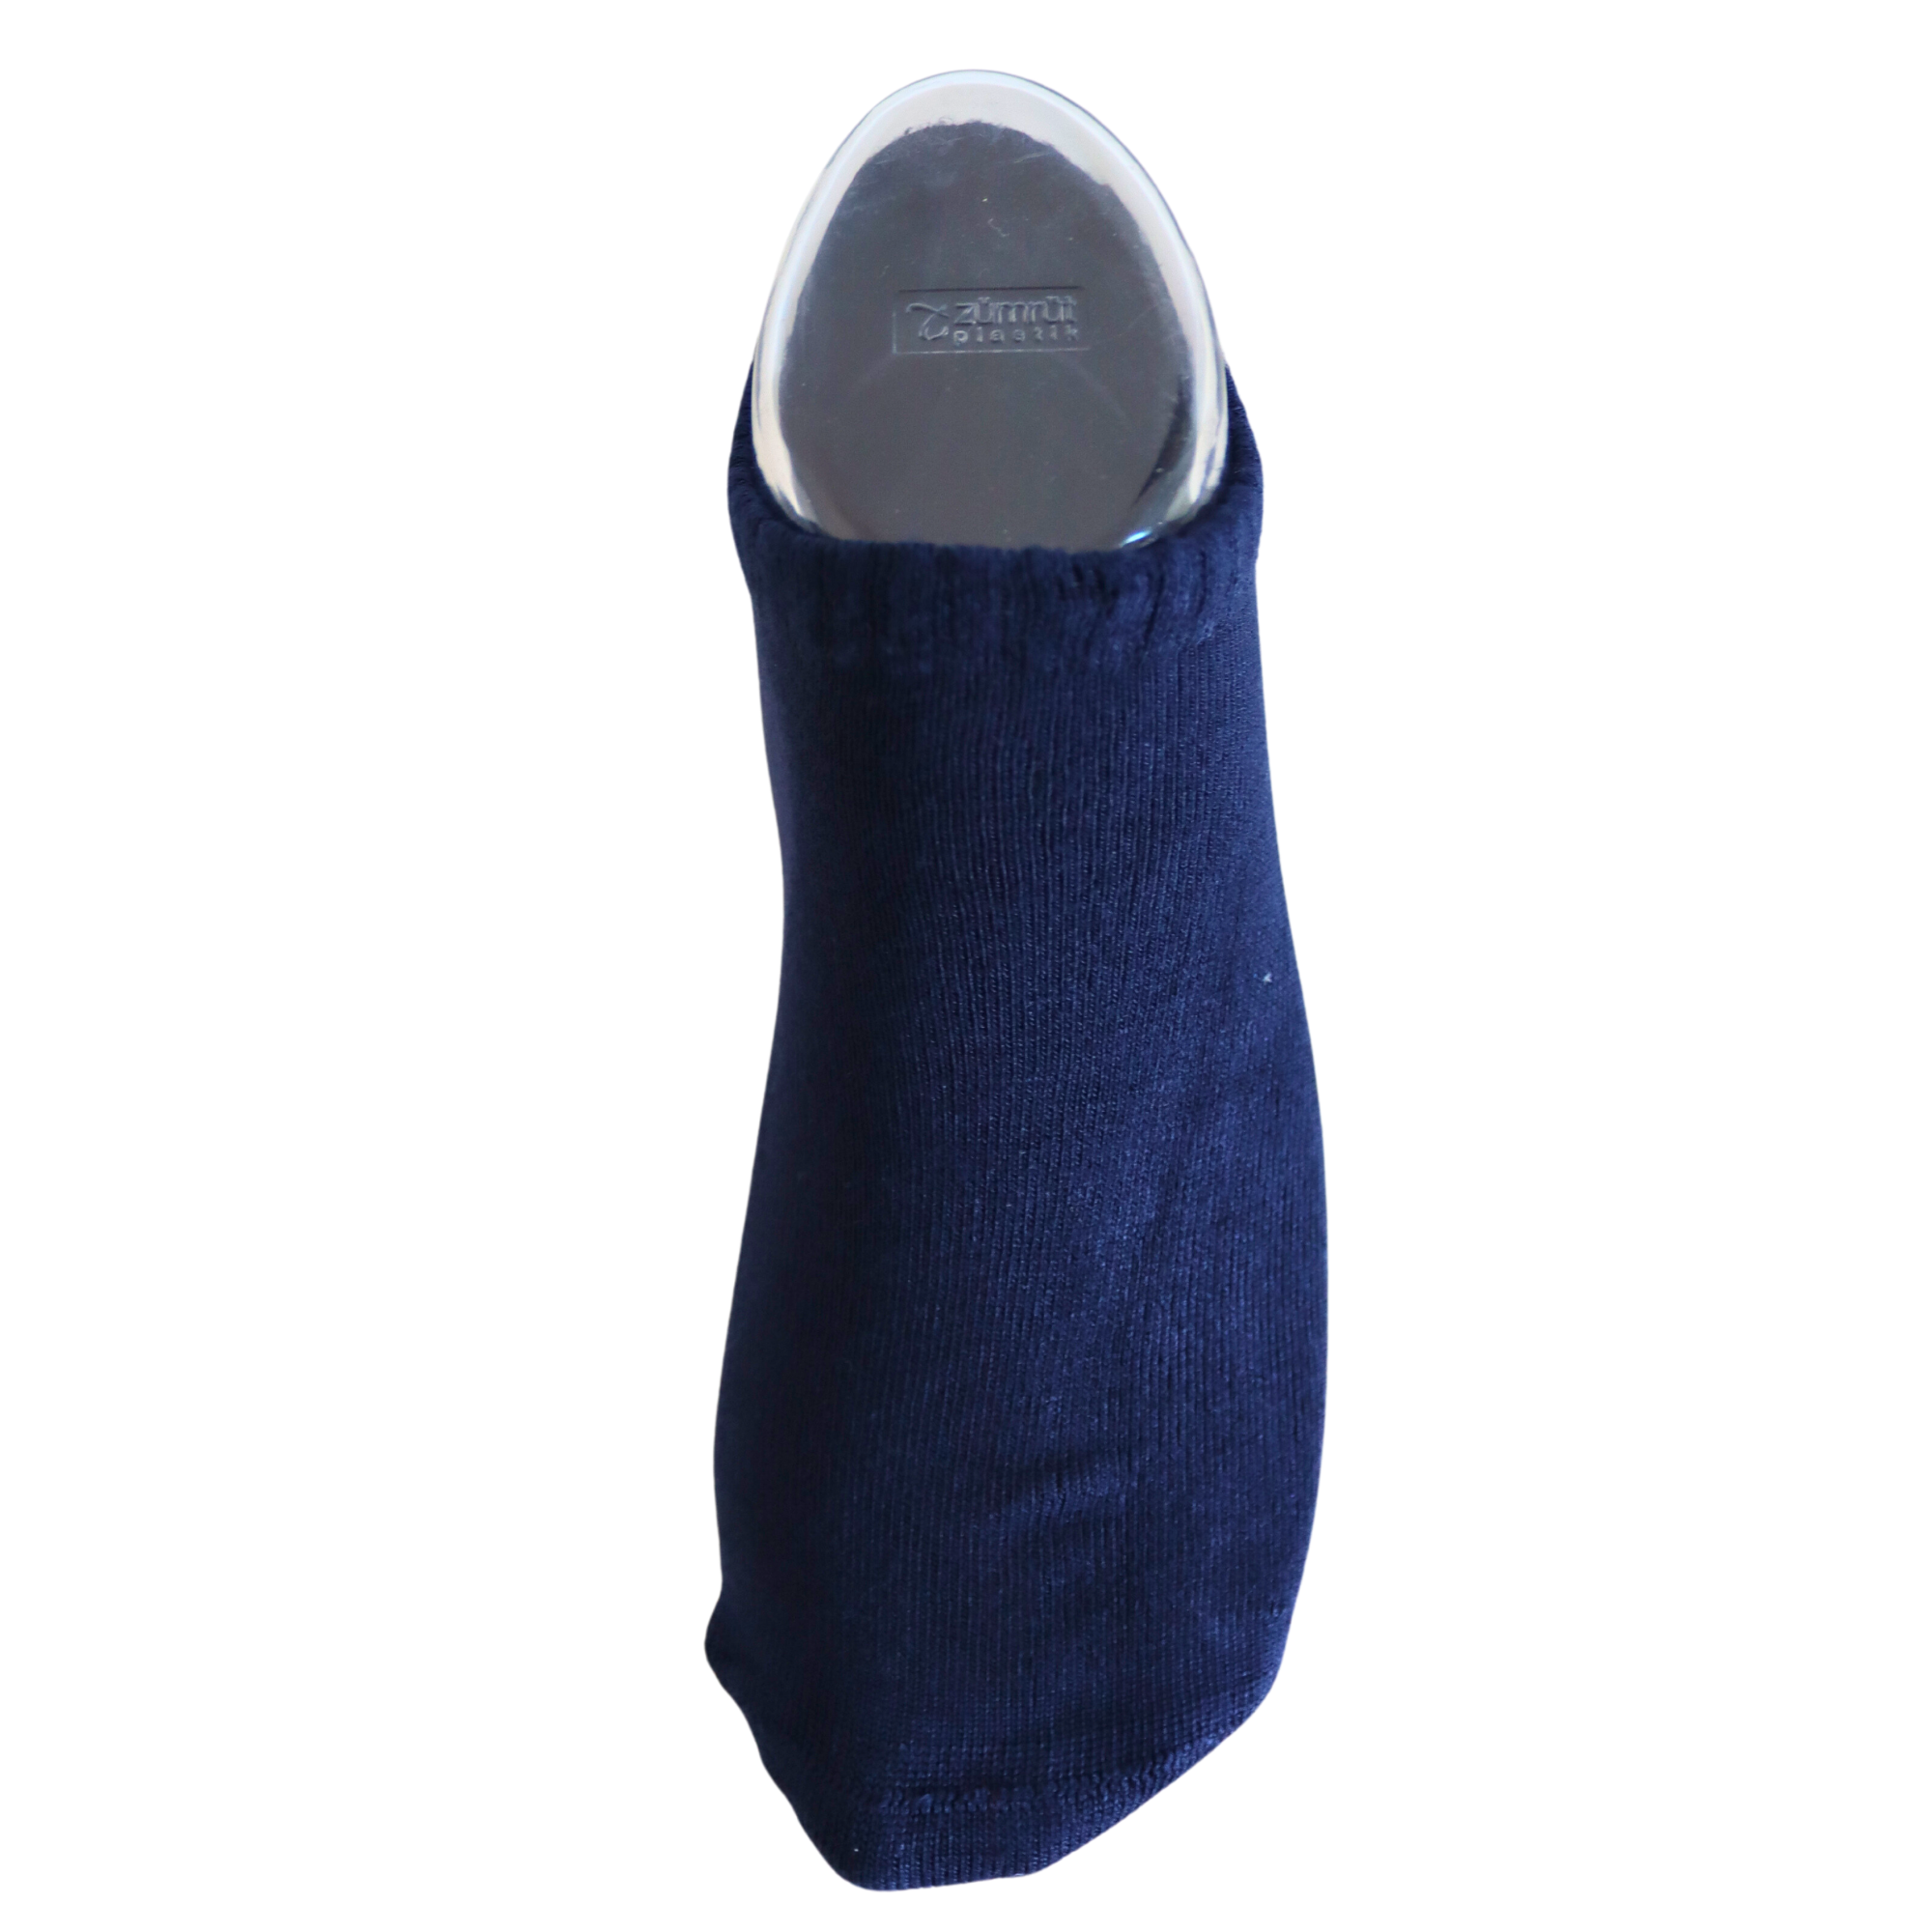 Louluu Men Dark Blue Color Sneaker Socks